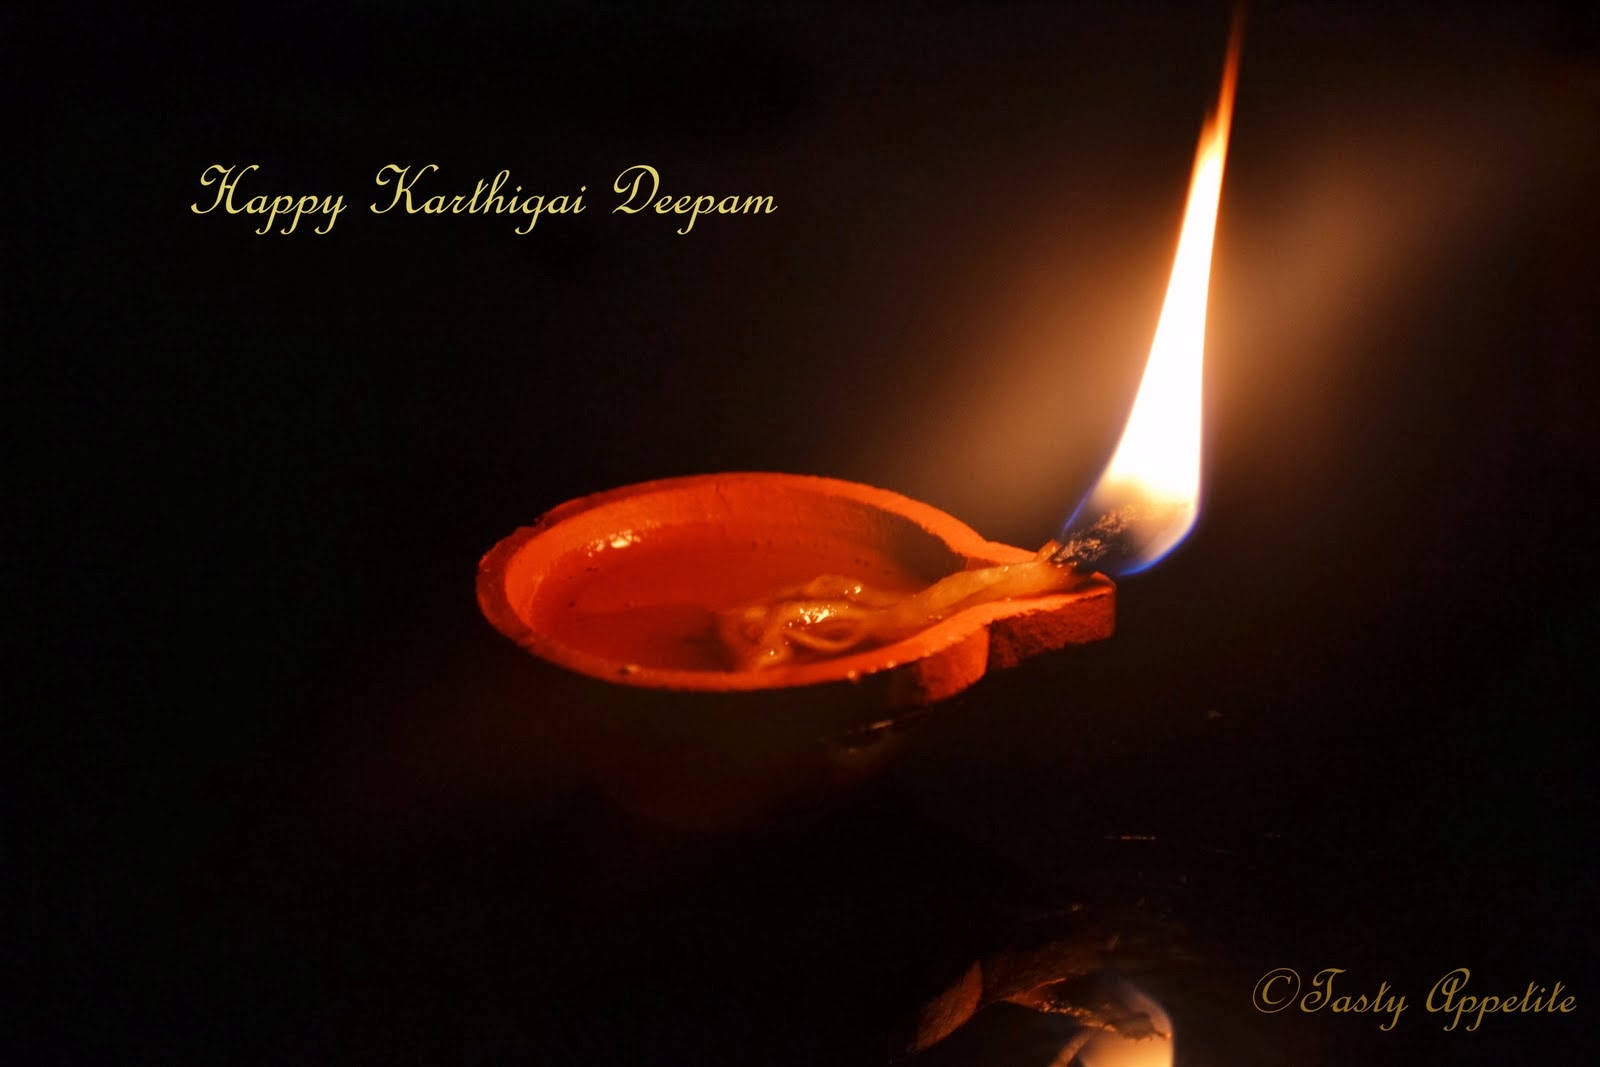 Sailkrishna's Blog: Karthigai Deepam